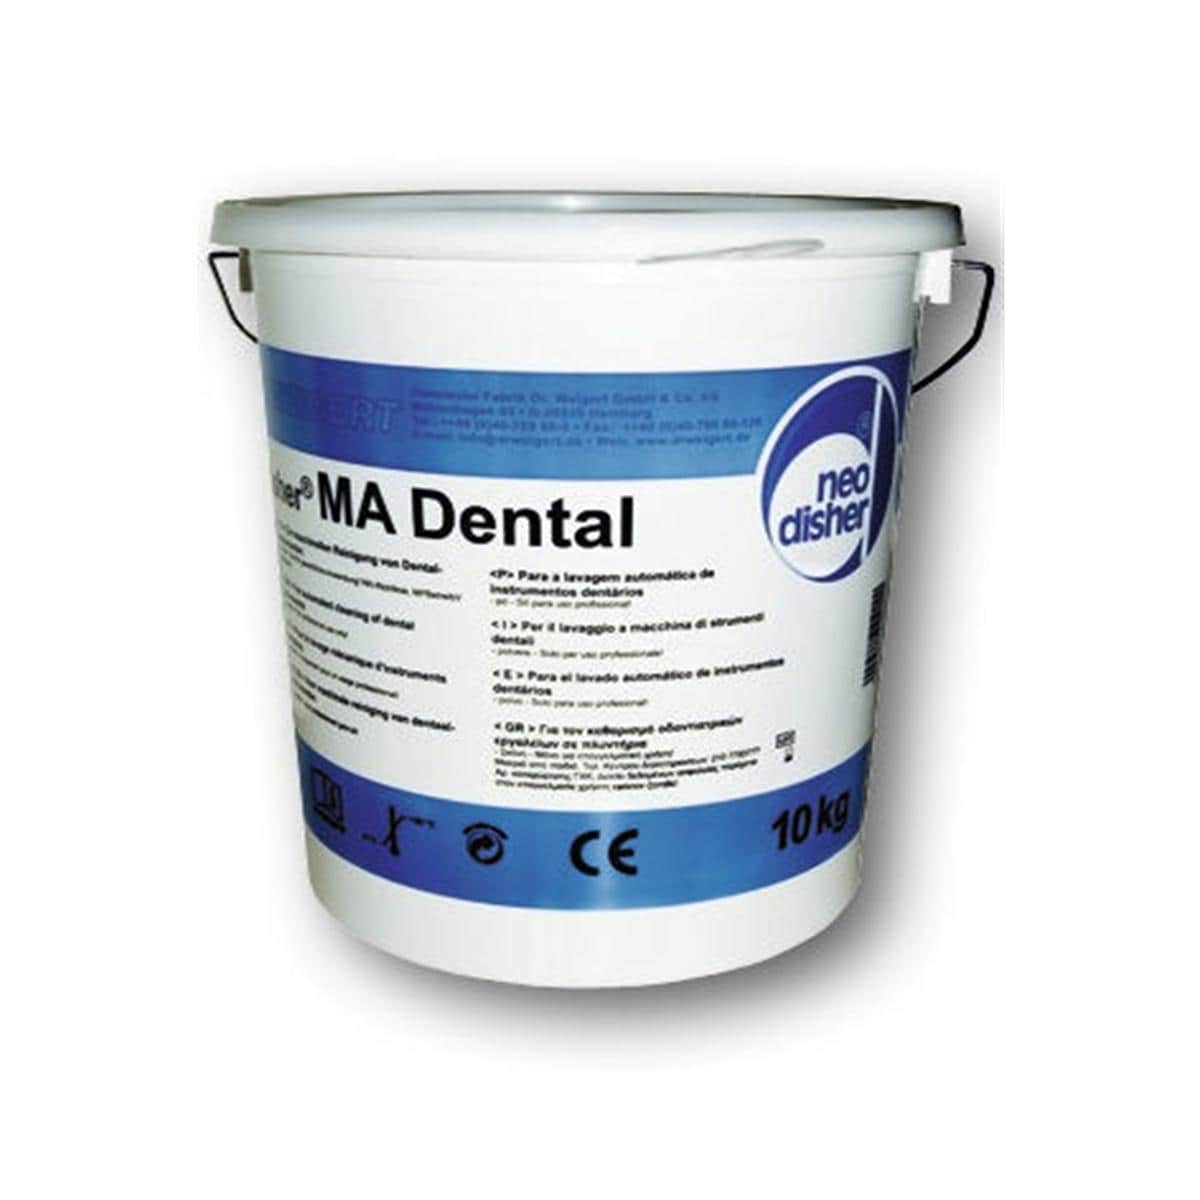 neodisher® MA Dental - Eimer 10 kg